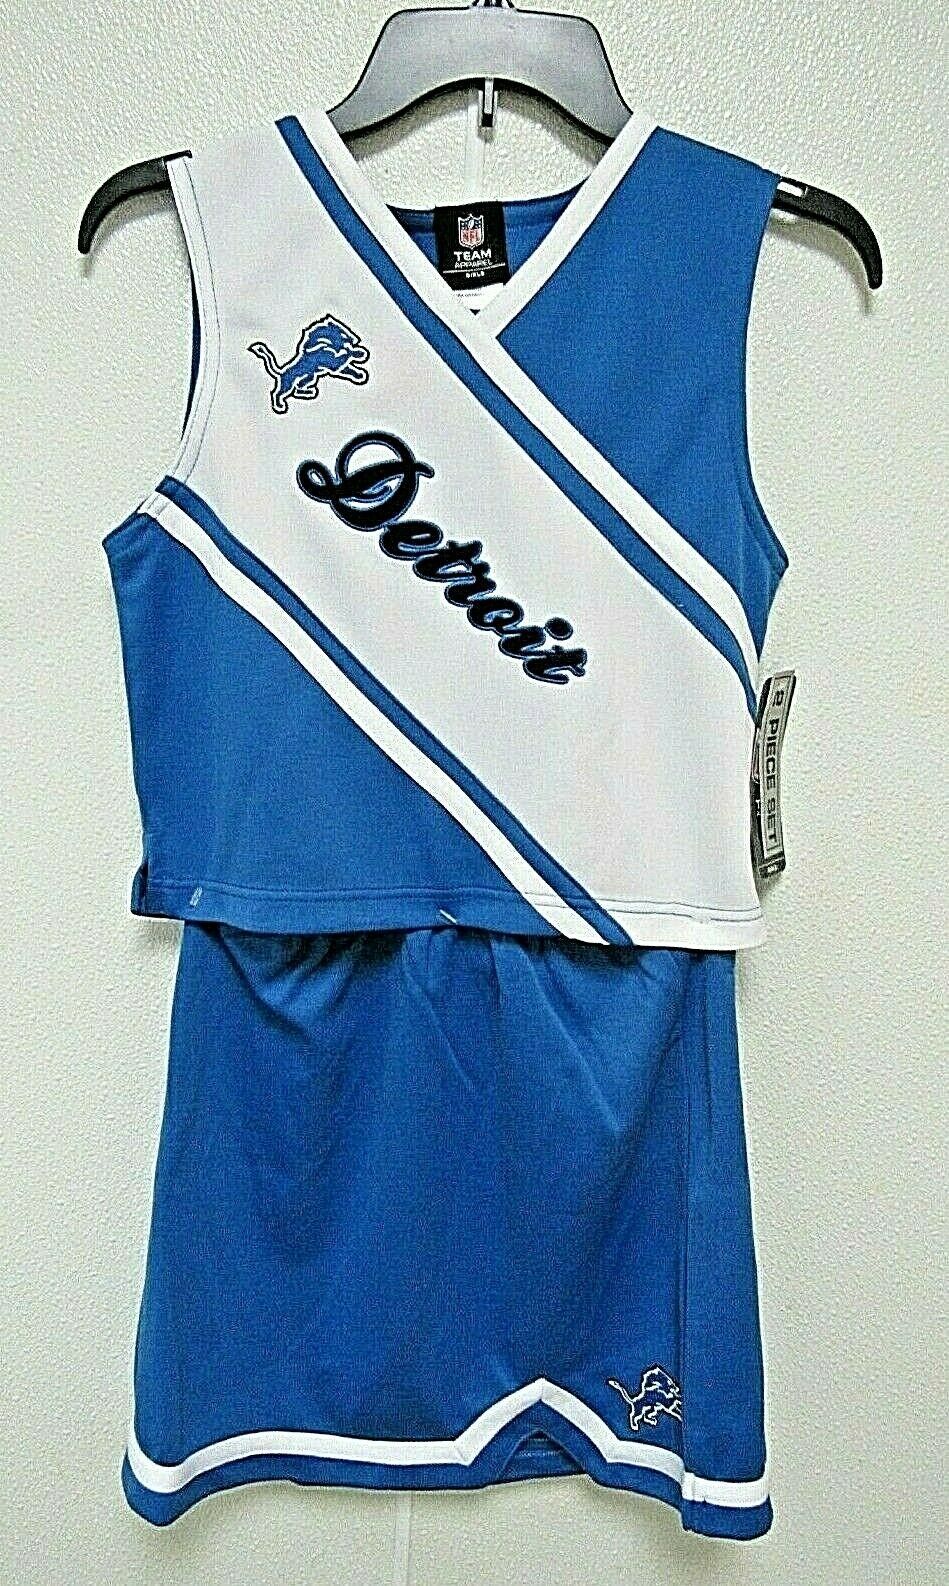 NFL Detroit Lions Child Cheer Dress 2-pc size XL by Reebok - $39.95